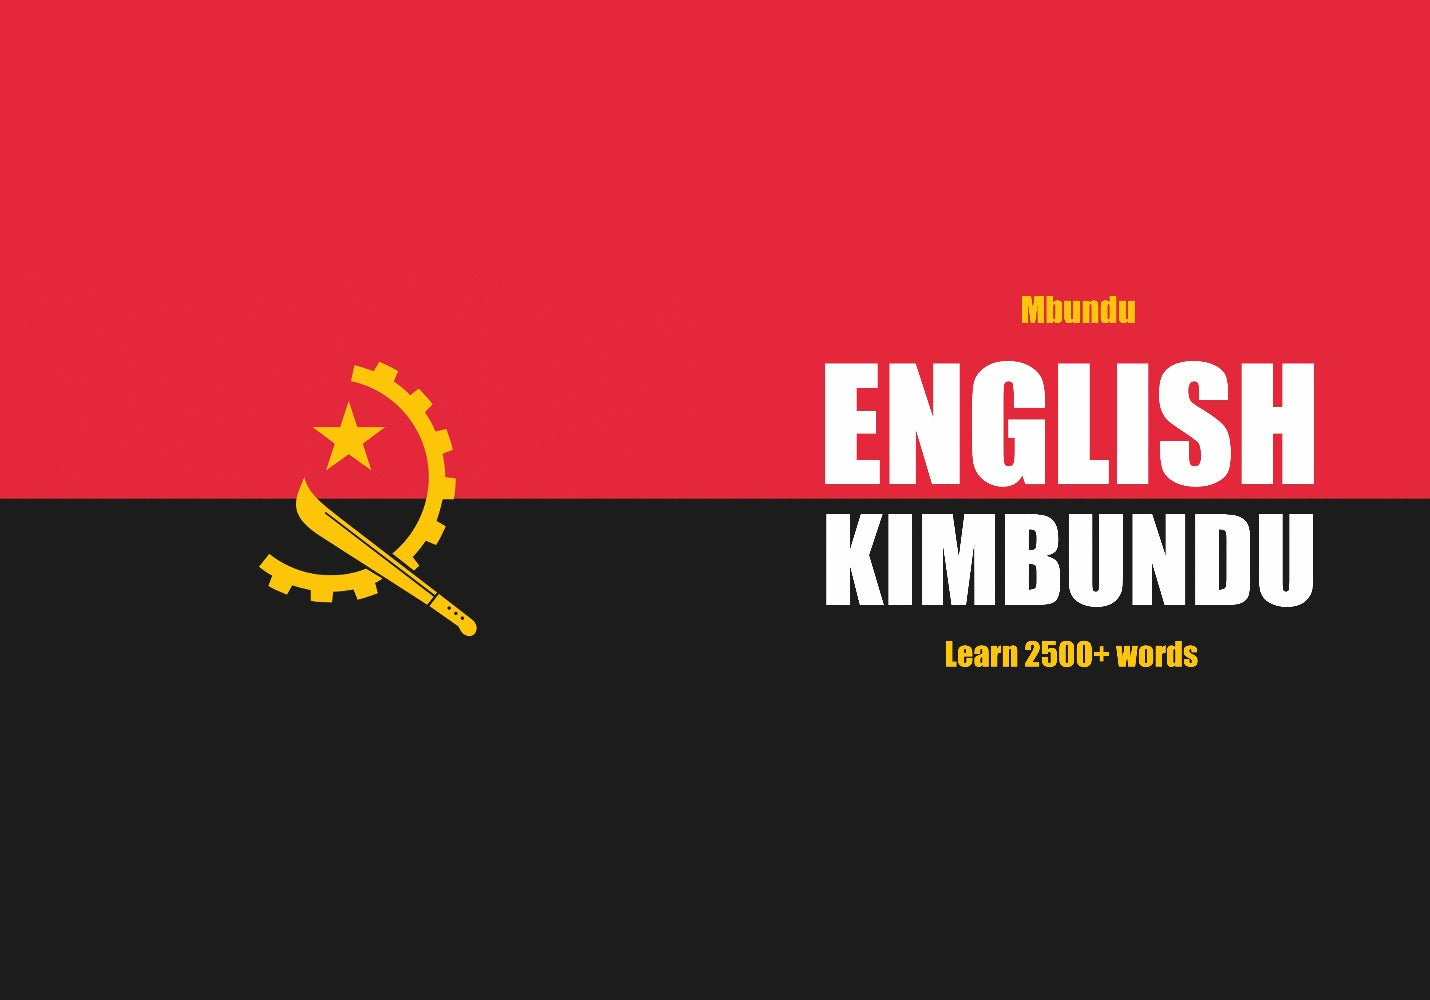 Kimbundu language learning notebook cover